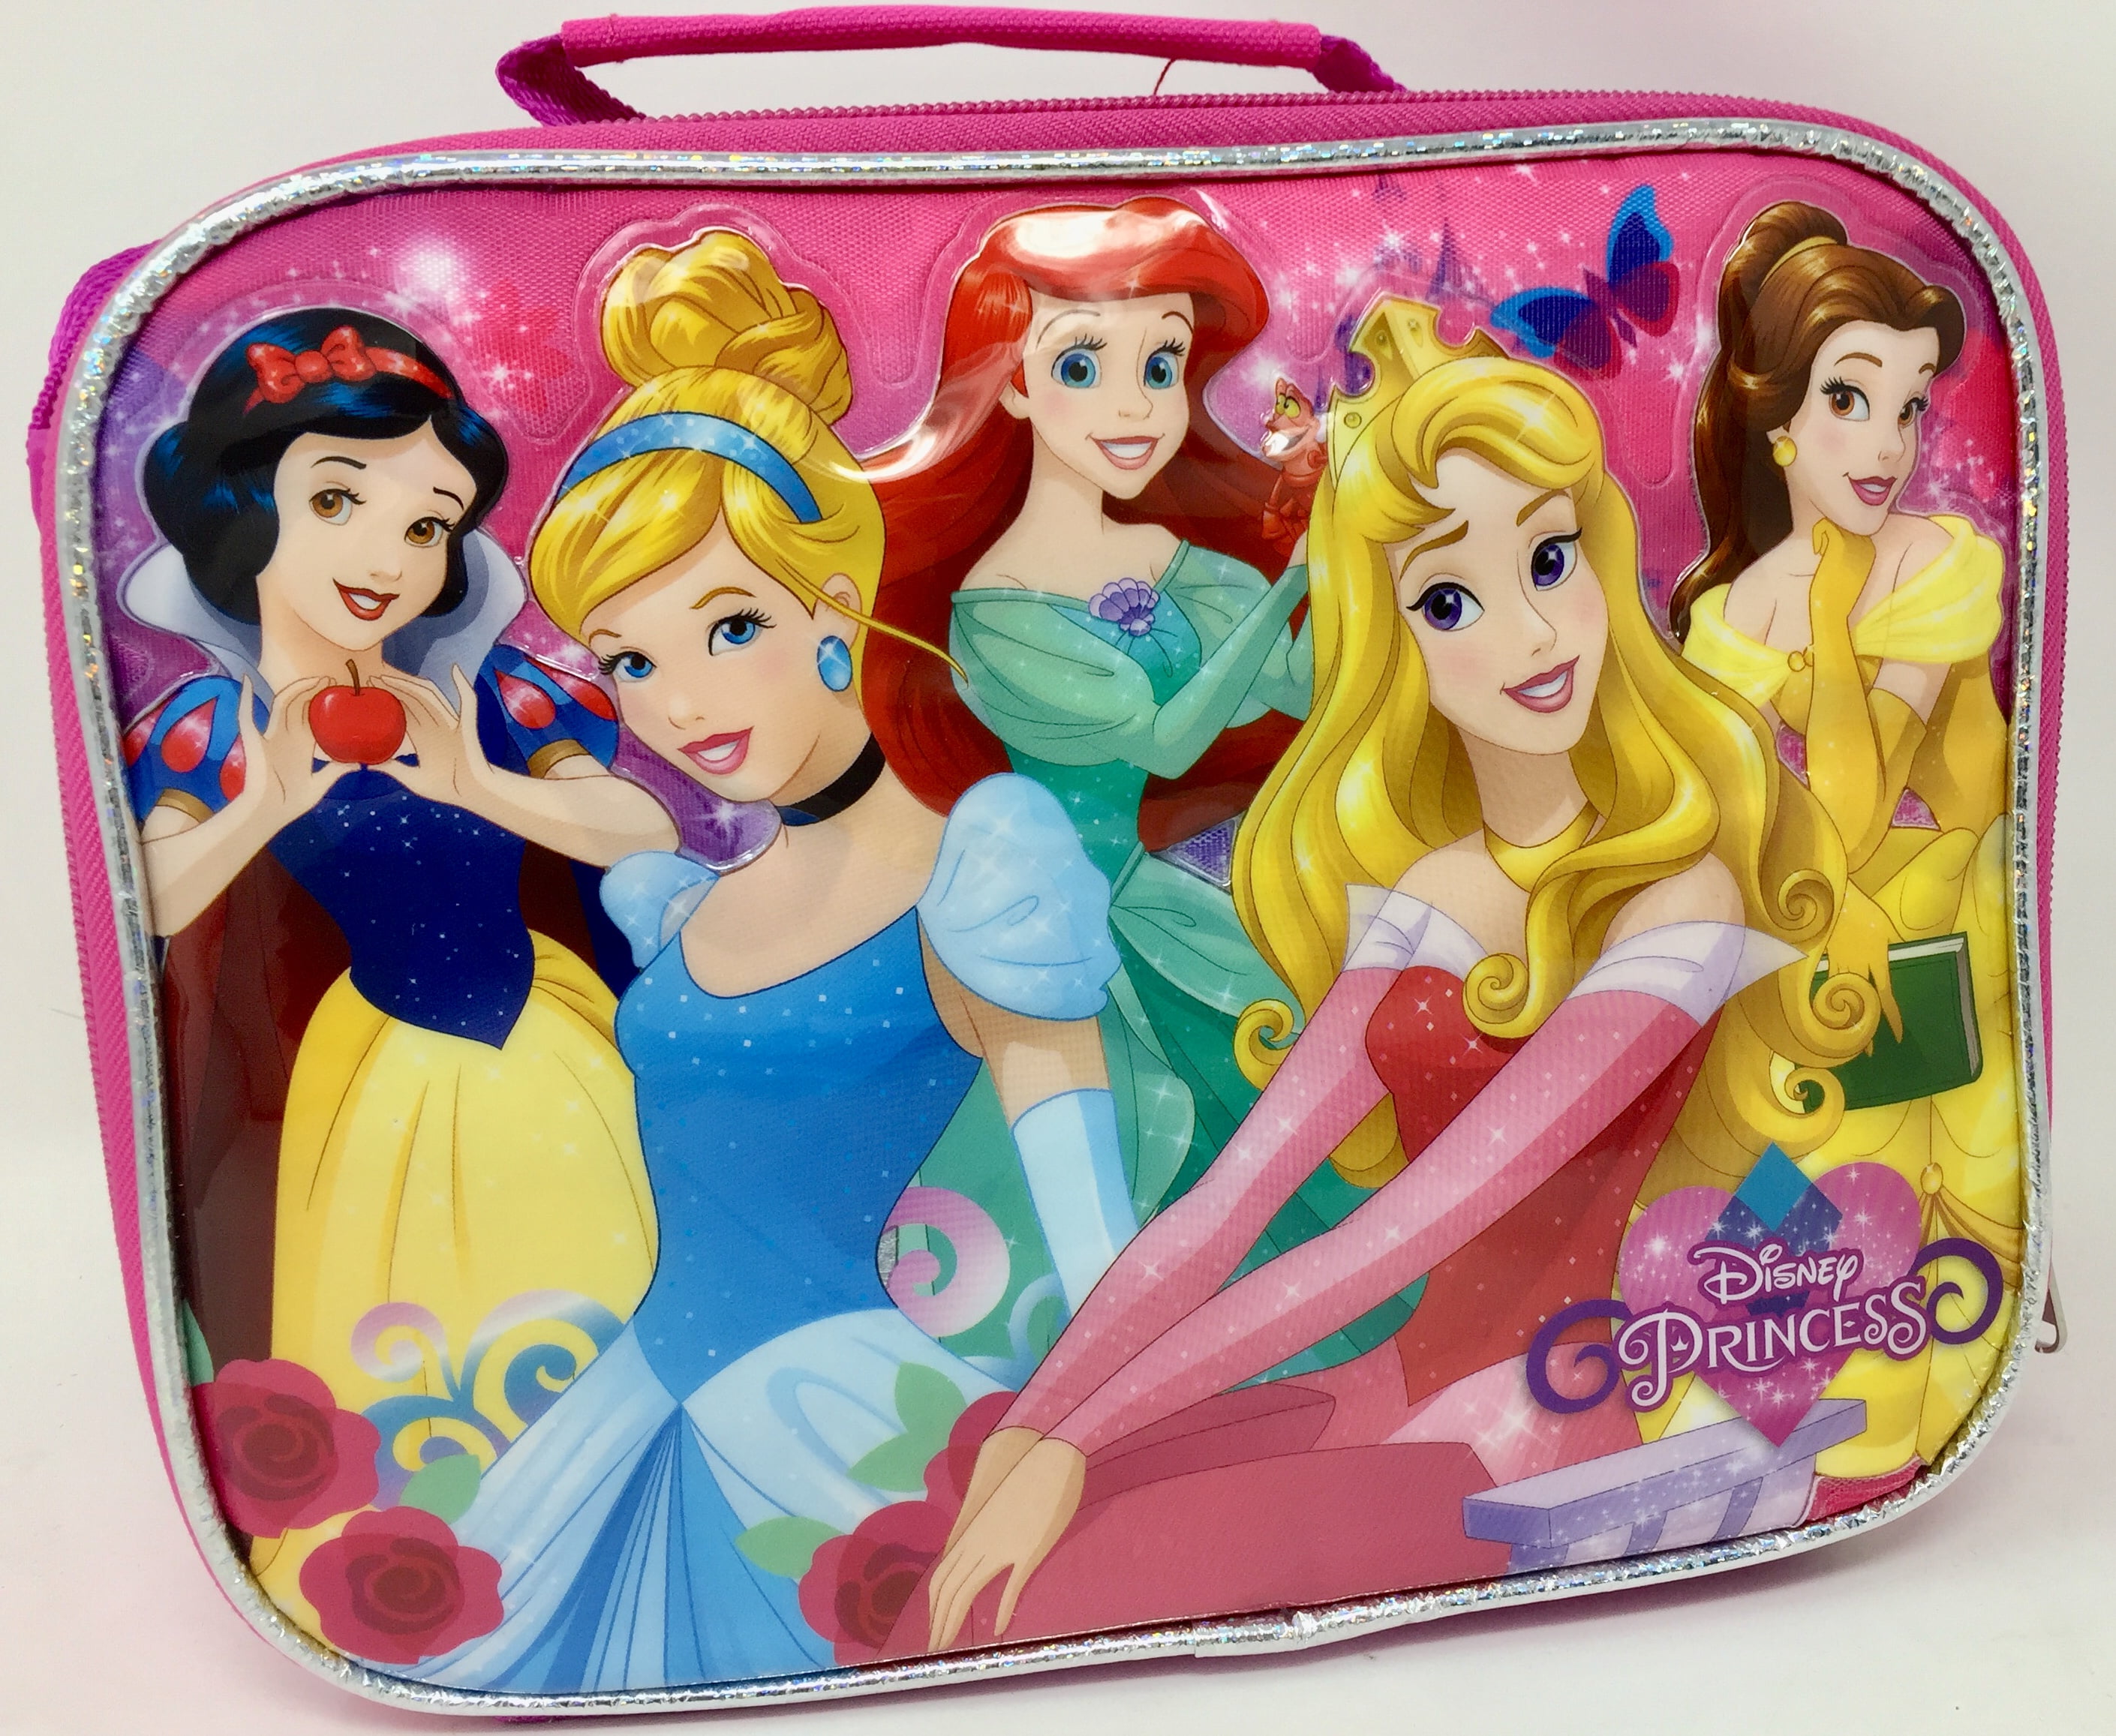 Disney Princess Lunch Box Soft Sided Insulated Cooler Bag Cinderella & Rapunzel 